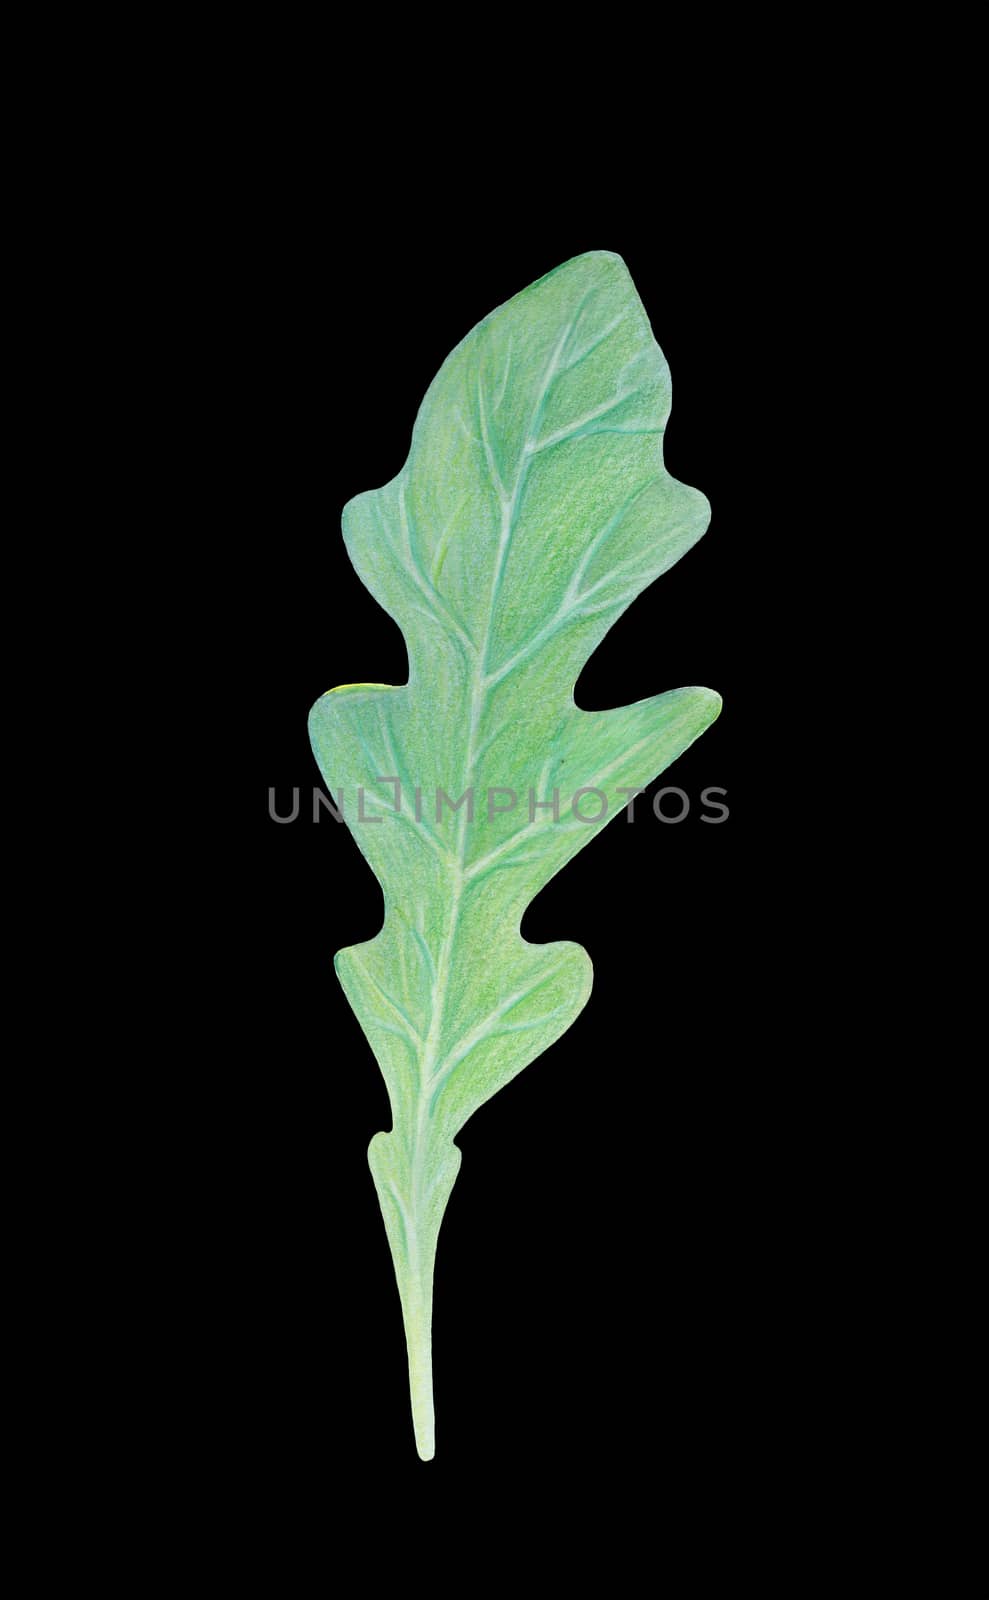 Arugula rucola, rocket salad fresh green leaf isolated on black background. Watercolor hand drawn illustration. Fresh herbs. Realistic botanical art. Vegetarian Ingredient. Packaging, organic print.